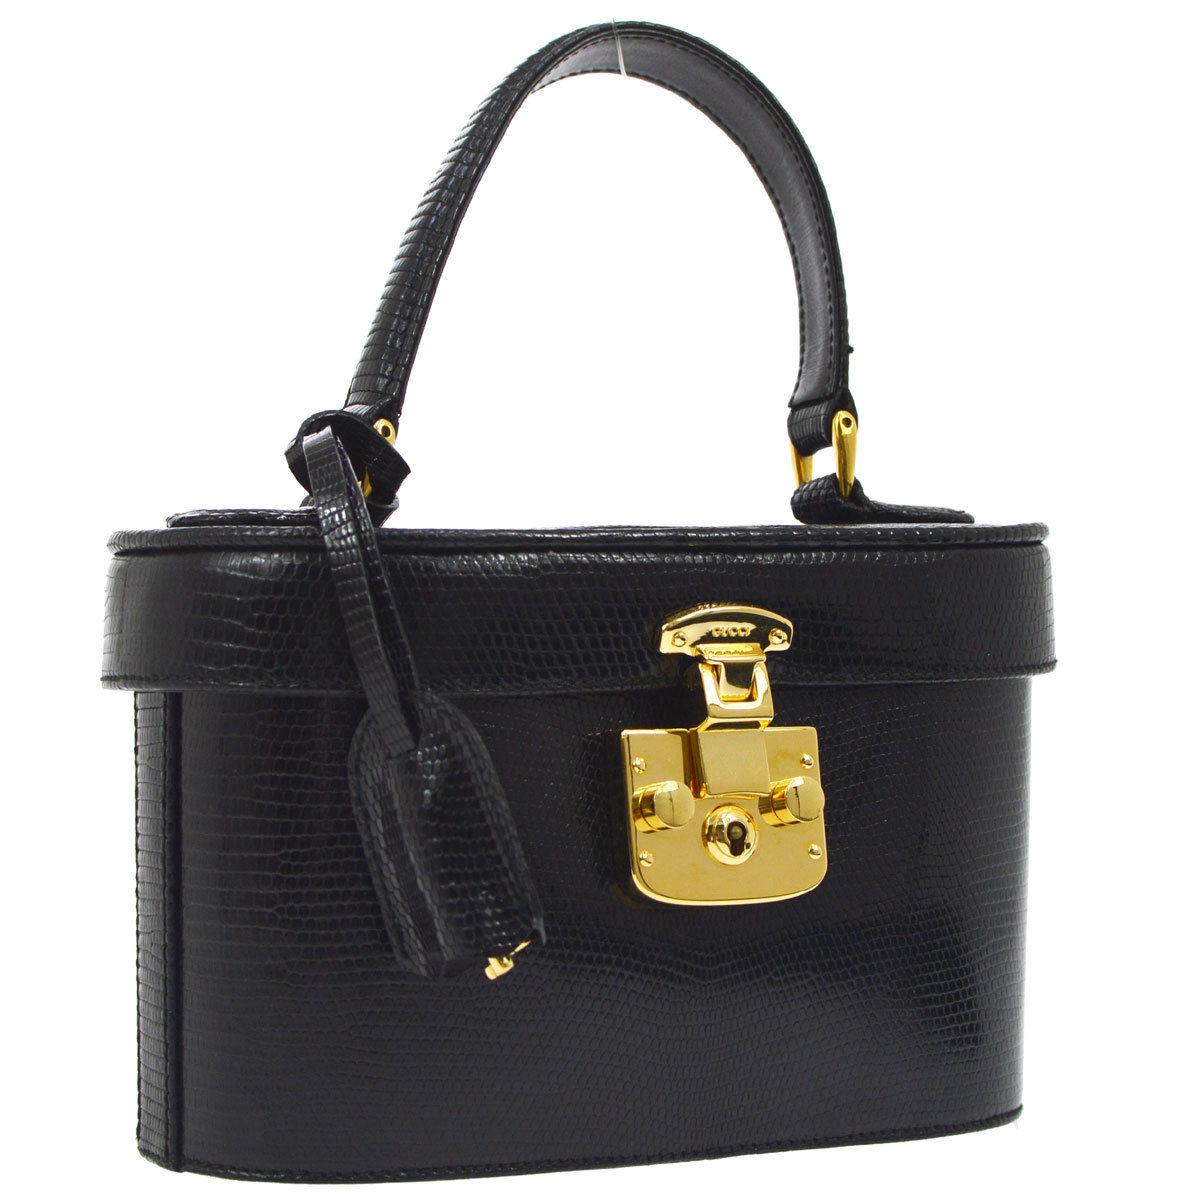 Gucci Black Lizard Leather Top Handle Satchel Vanity Style Mini Small Bag